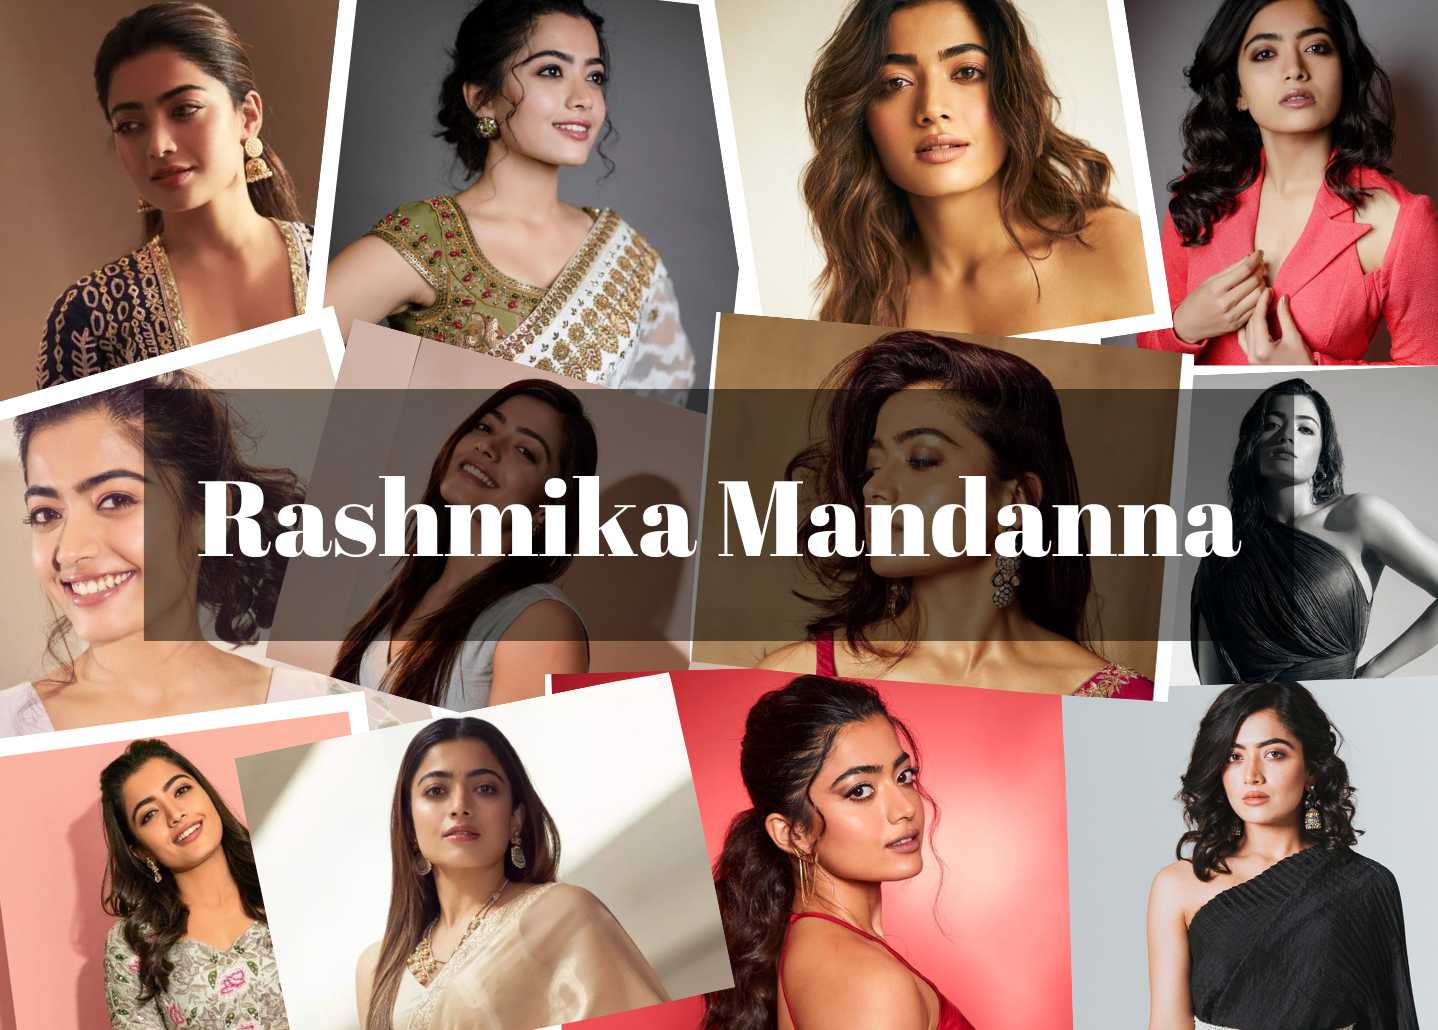 Rashmeka Sex - Rashmika Mandanna - Family, Biography, Boyfriend, Net worth